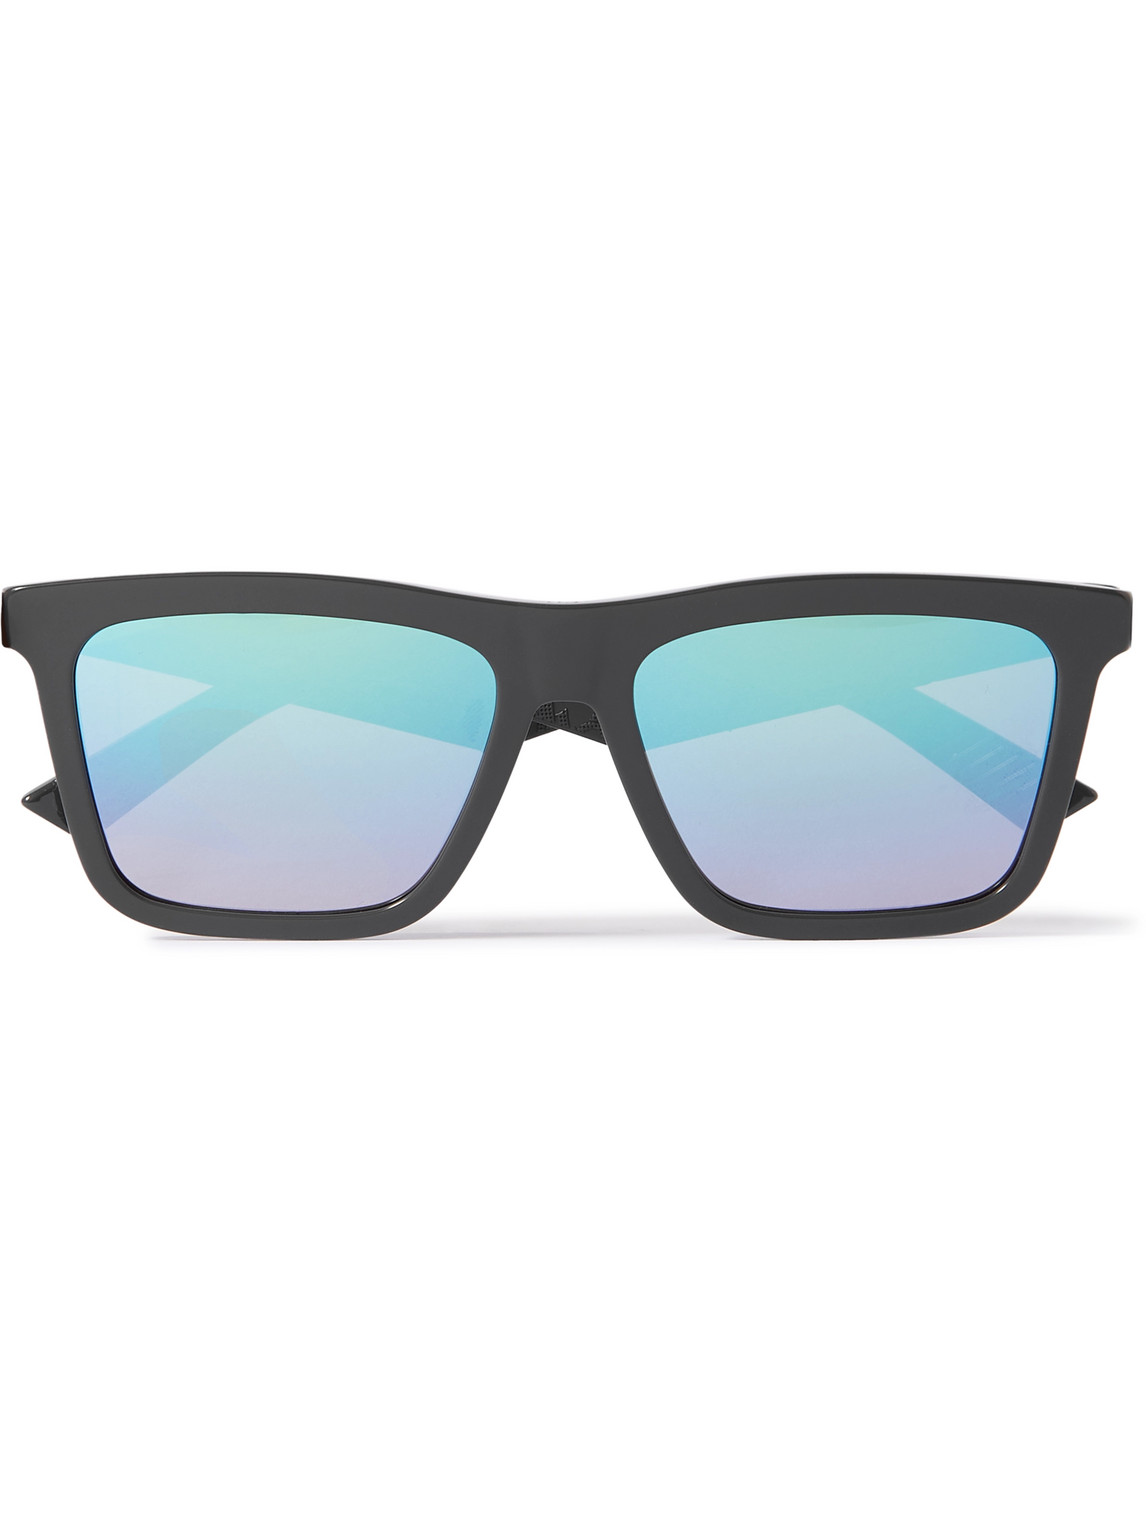 Balenciaga Outlet: Max D-Frame sunglasses in acetate - Black | Balenciaga  sunglasses 725186T0039 online at GIGLIO.COM